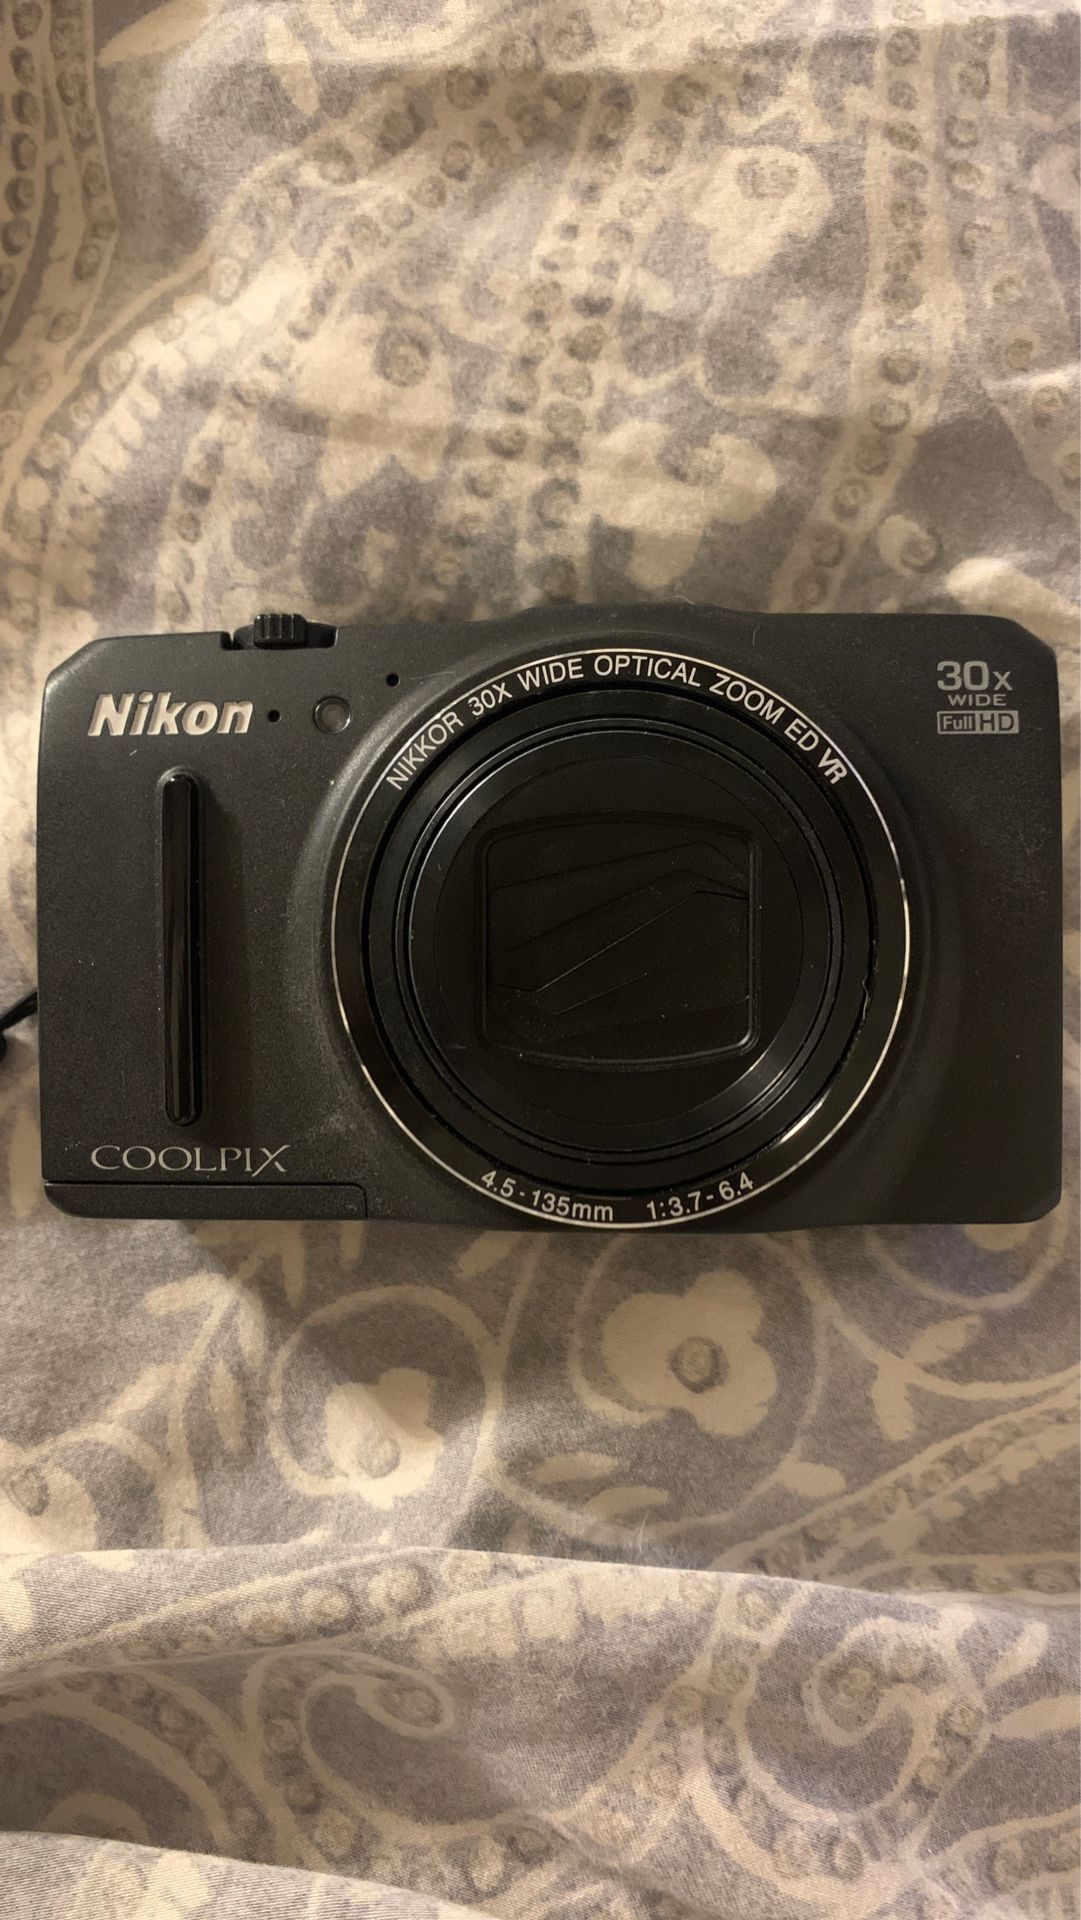 Nikon COOLPIX S9700